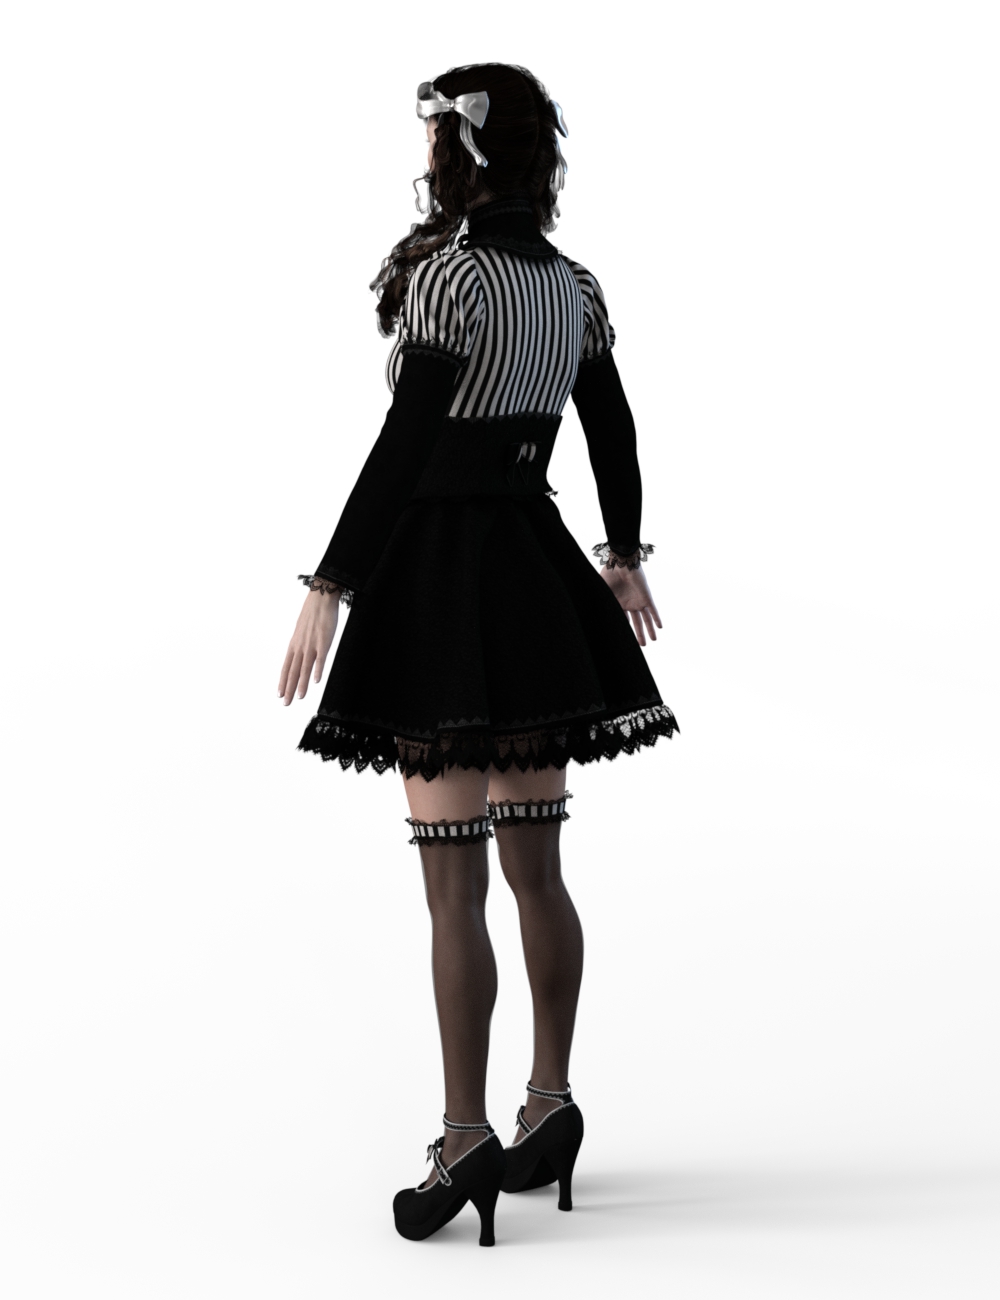 FBX- Mei Lin Gothic Lolita Outfit by: Paleo, 3D Models by Daz 3D